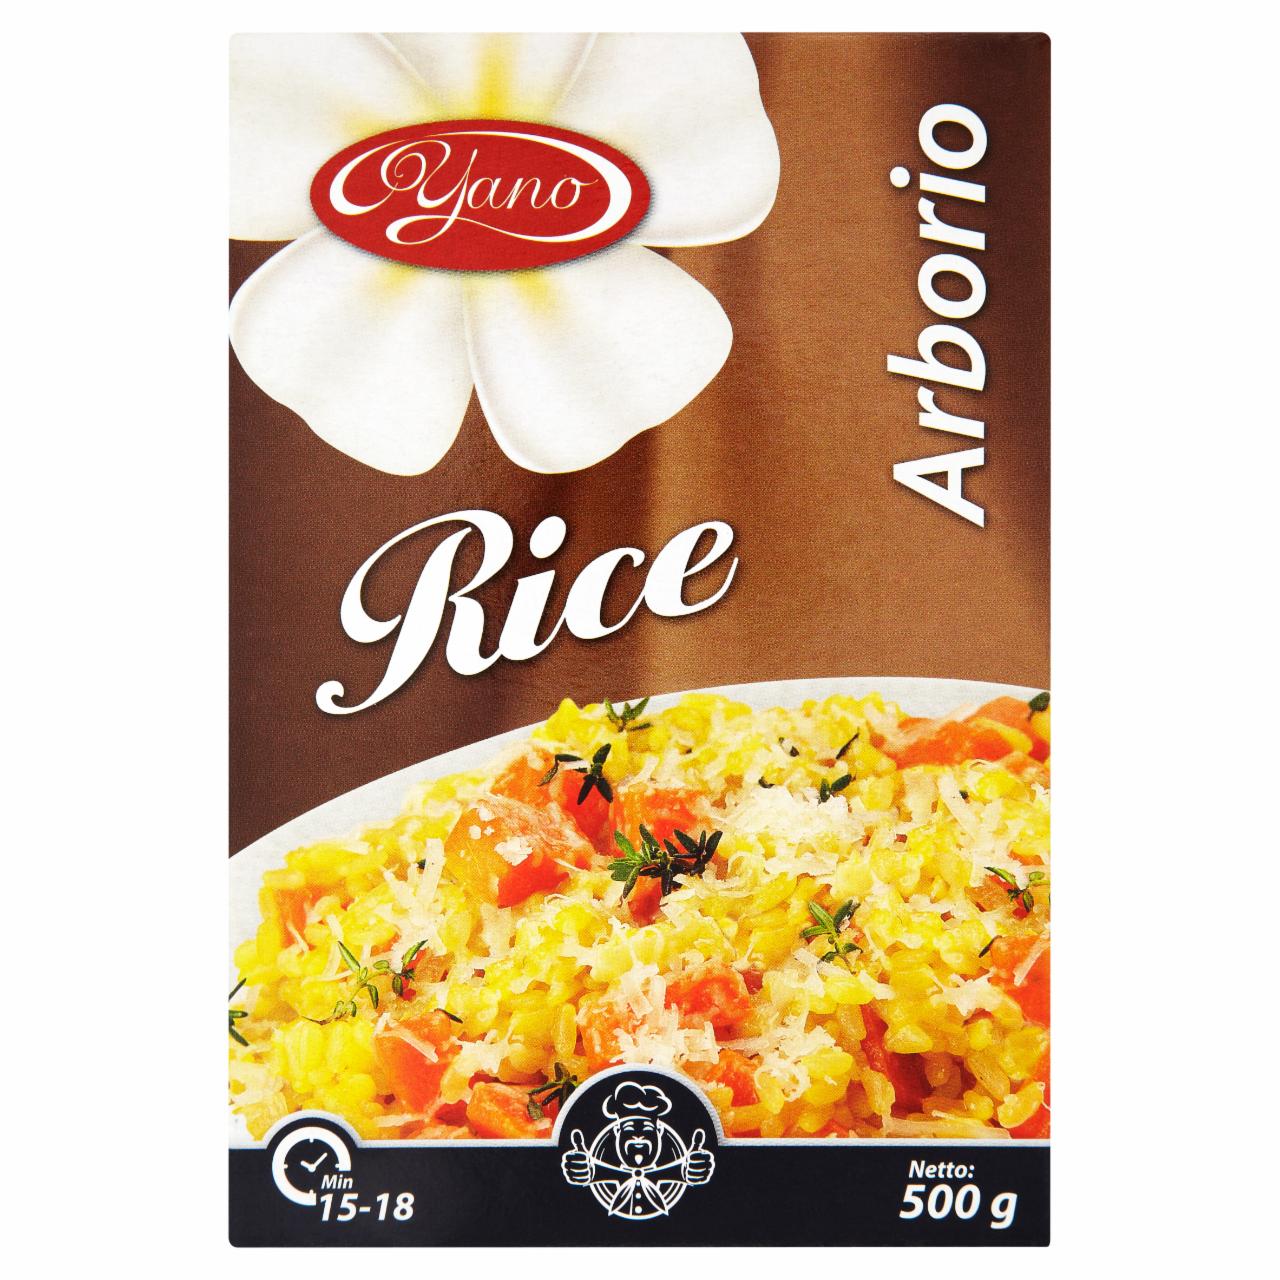 Képek - Yano Arborio rizs 500 g